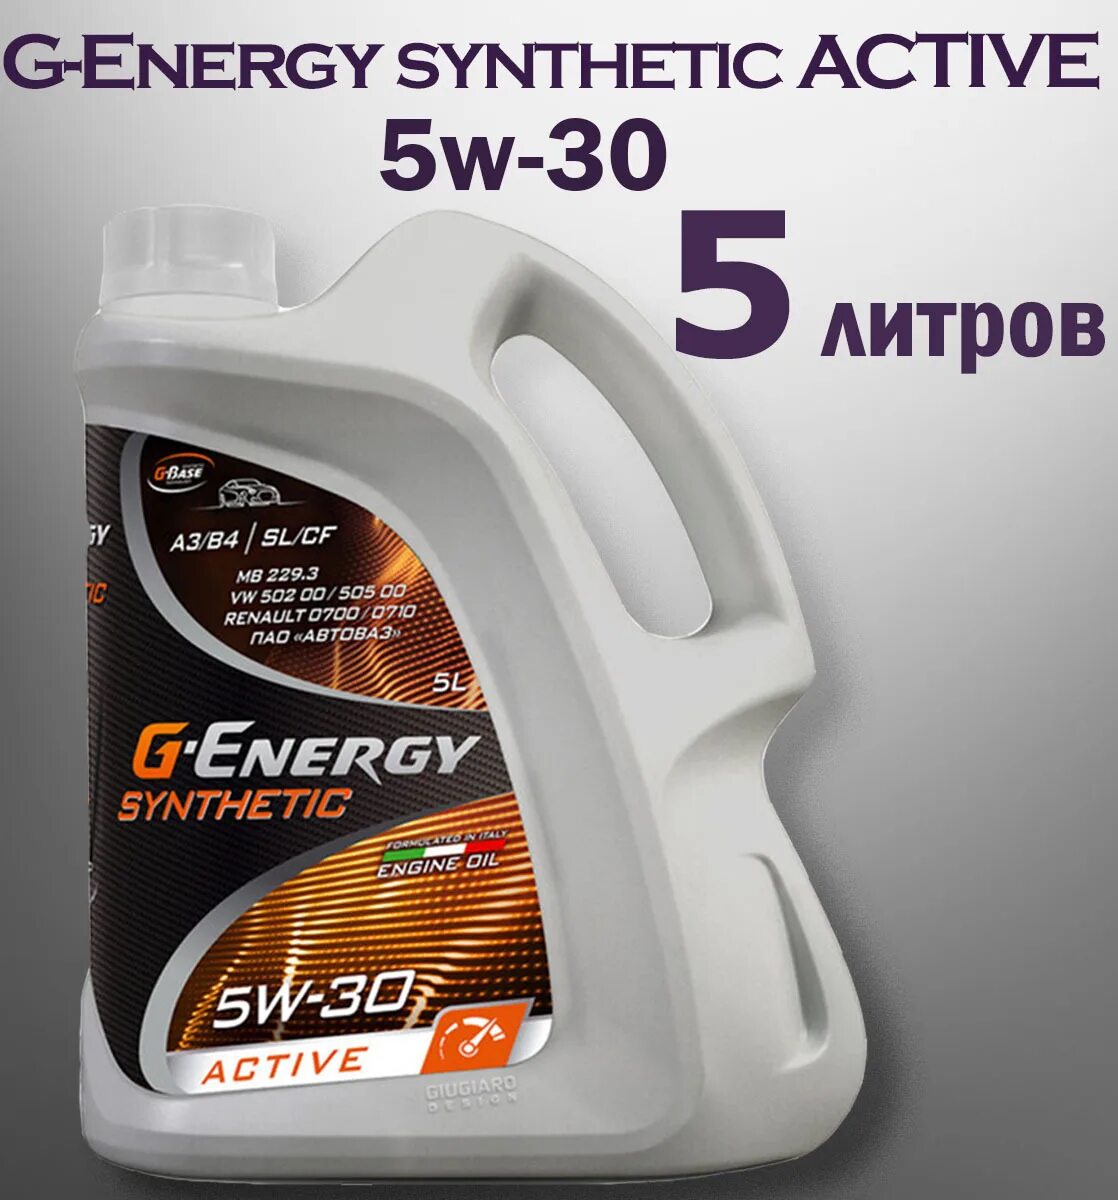 Масло g-Energy Syntetic Activ 5w30. G-Energy Synthetic Active 5w-30. G Energy 5w30 синтетика. Масло g Energy Synthetic Active 5w30.